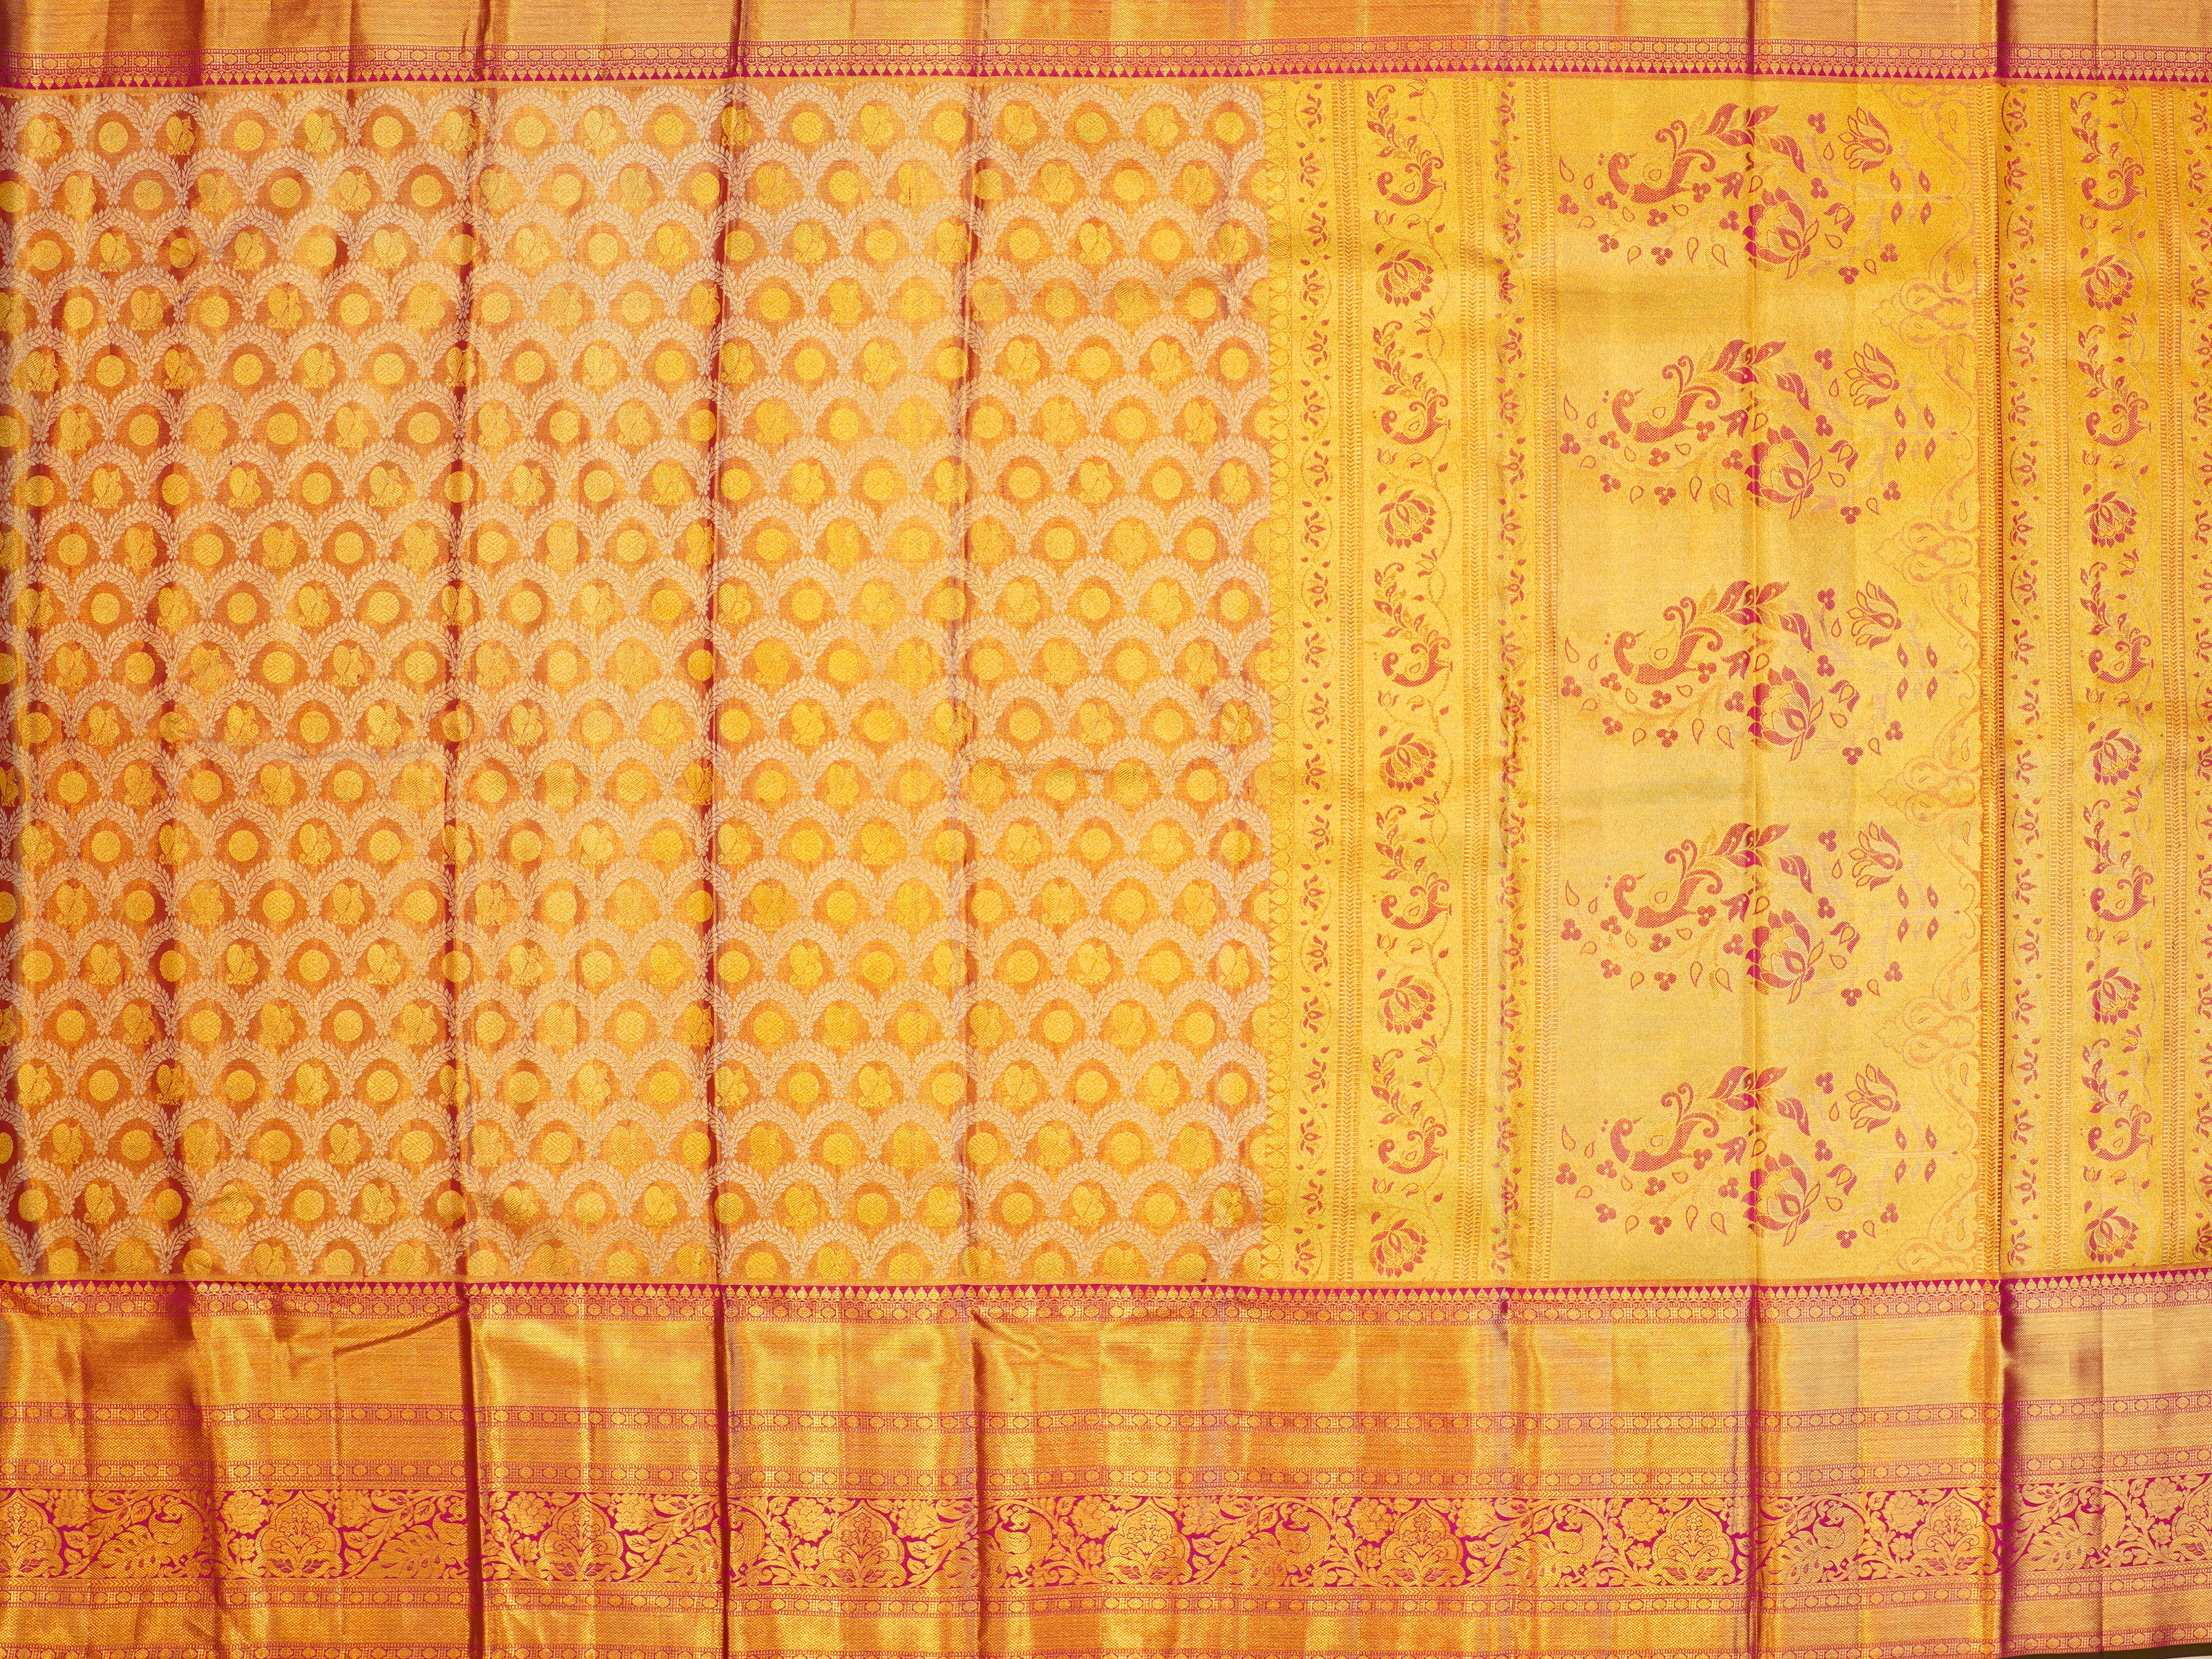 JSB-1972 | Gold & Pink Kanchi Pattu Saree